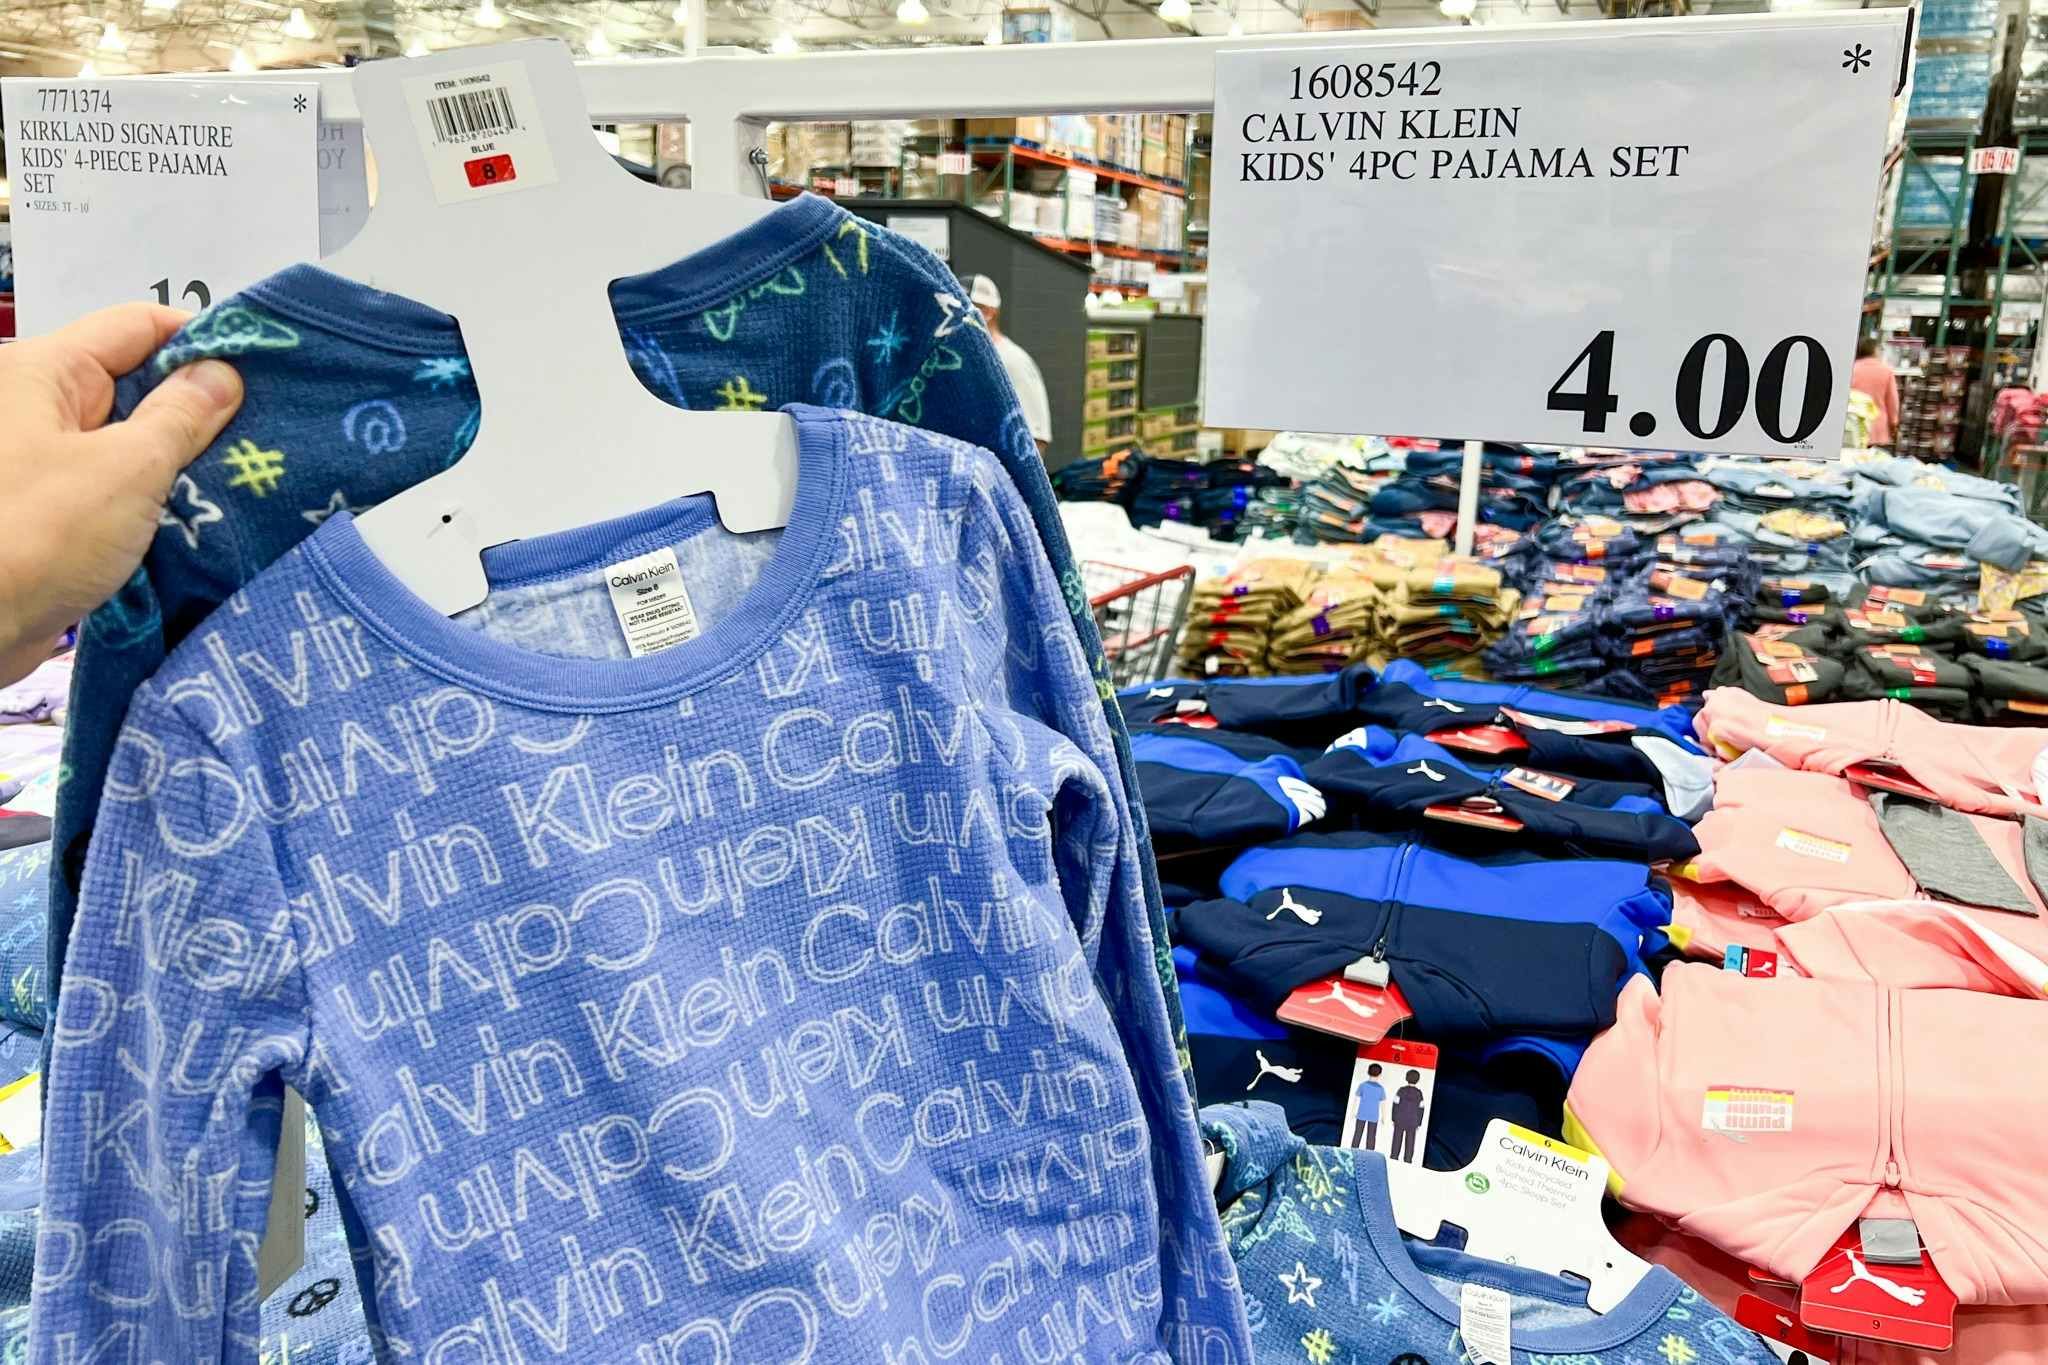 Calvin Klein Kids' 4-Piece Pajamas, Only $4 at Costco (Reg. $18.99)